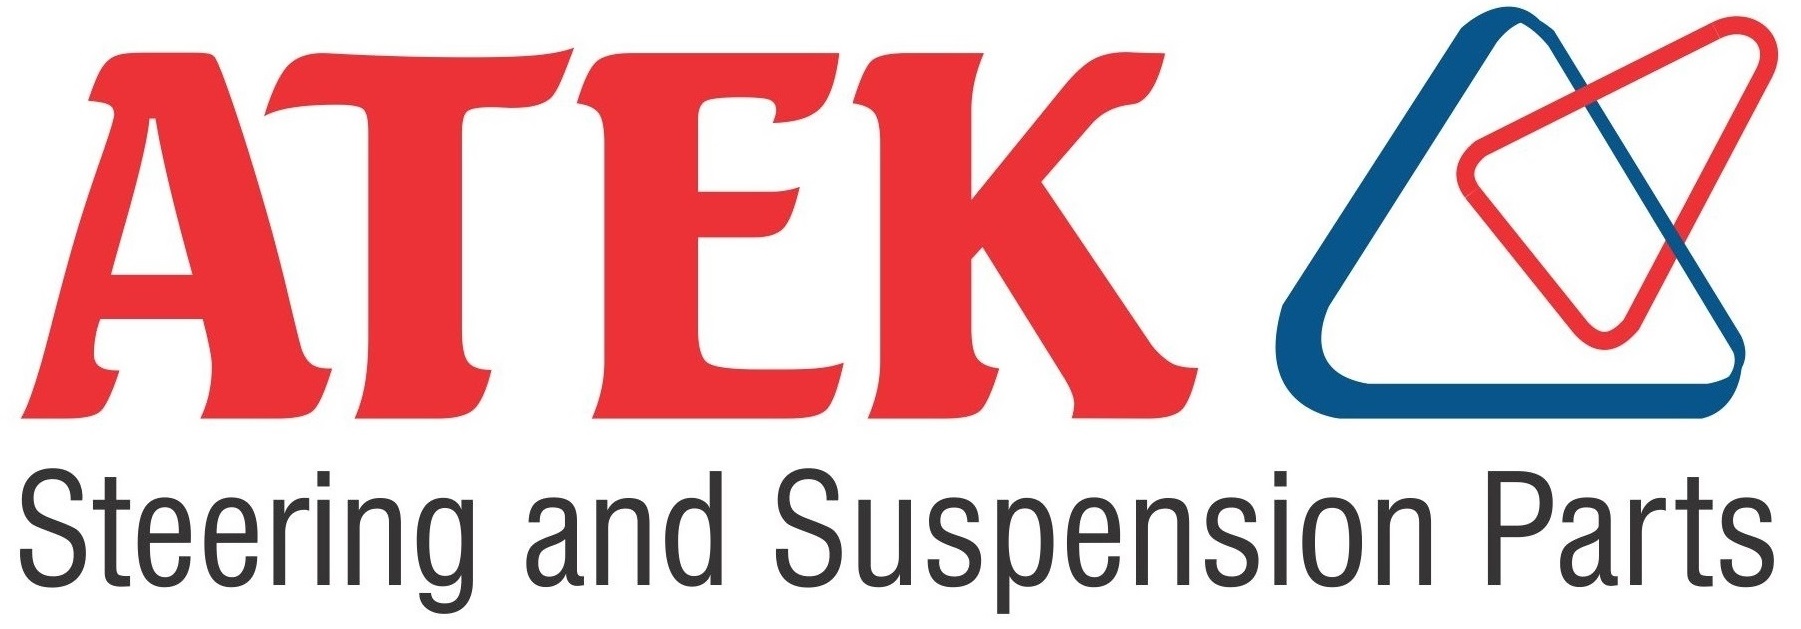 Atek logo_Silver partner1 - rev